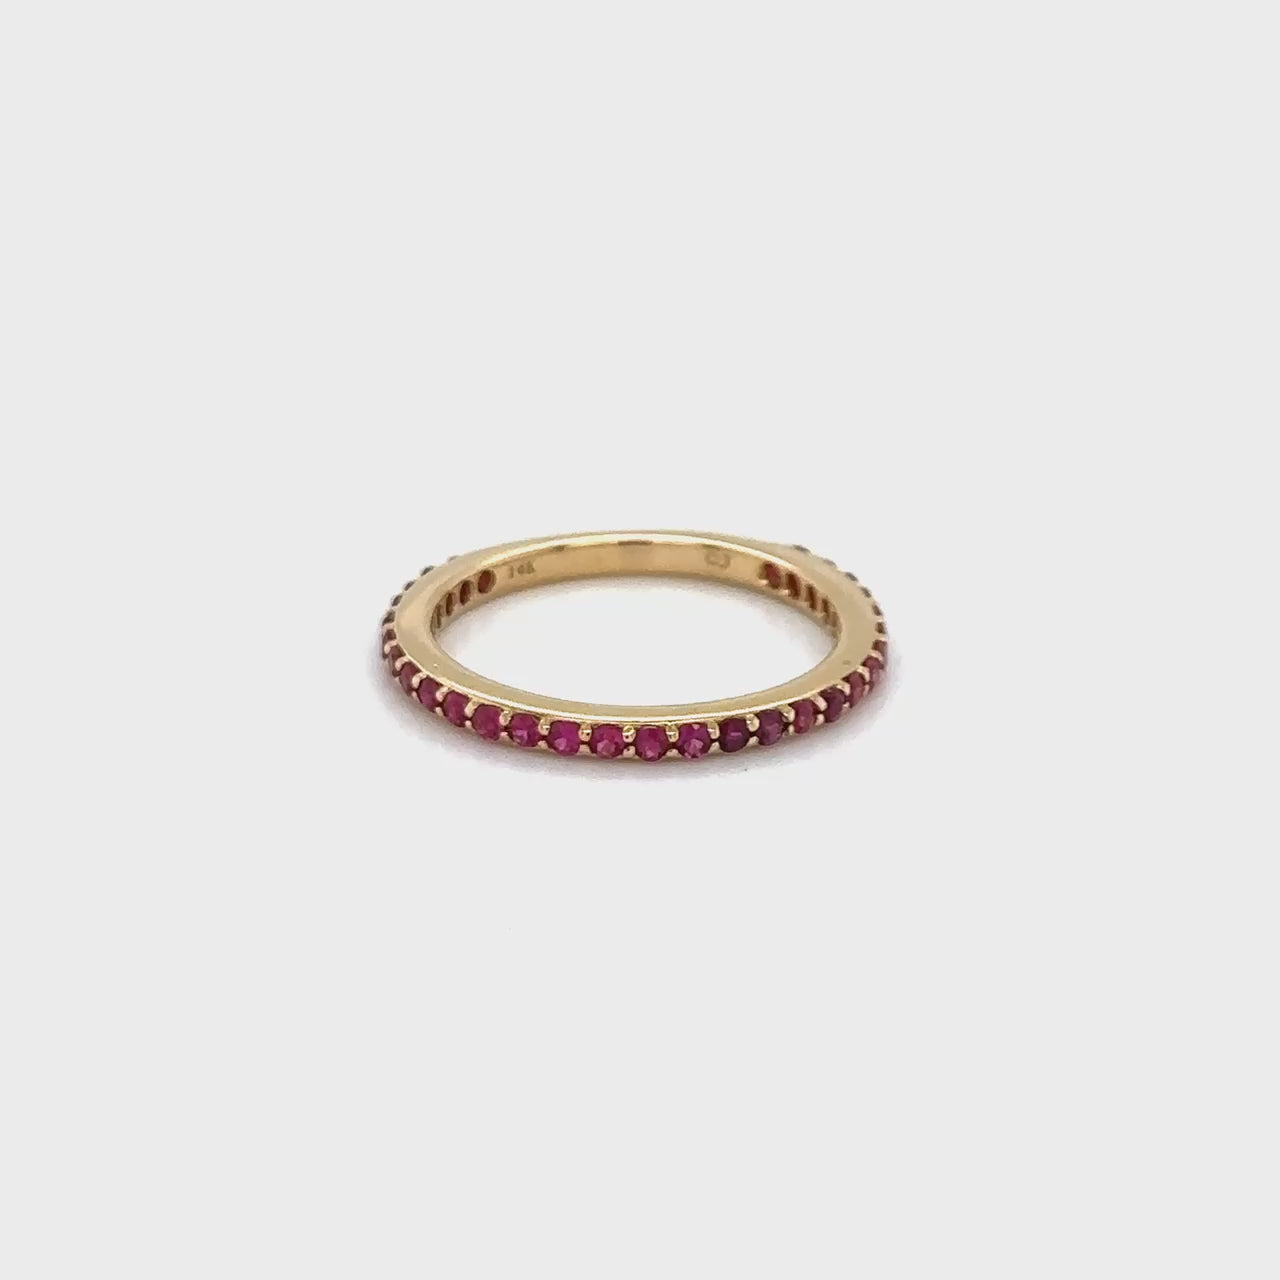 "Round Ruby Eternity Ring," "Ruby Eternity Band," "Red Gemstone Ring," "Eternity Ring with Rubies," "Round Cut Ruby Ring," "Elegant Ruby Jewelry," "Luxury Ruby Ring," "Gemstone Eternity Ring," "Fine Ruby Accessories," "Statement Ruby Ring," "High-Quality Ruby Jewelry.